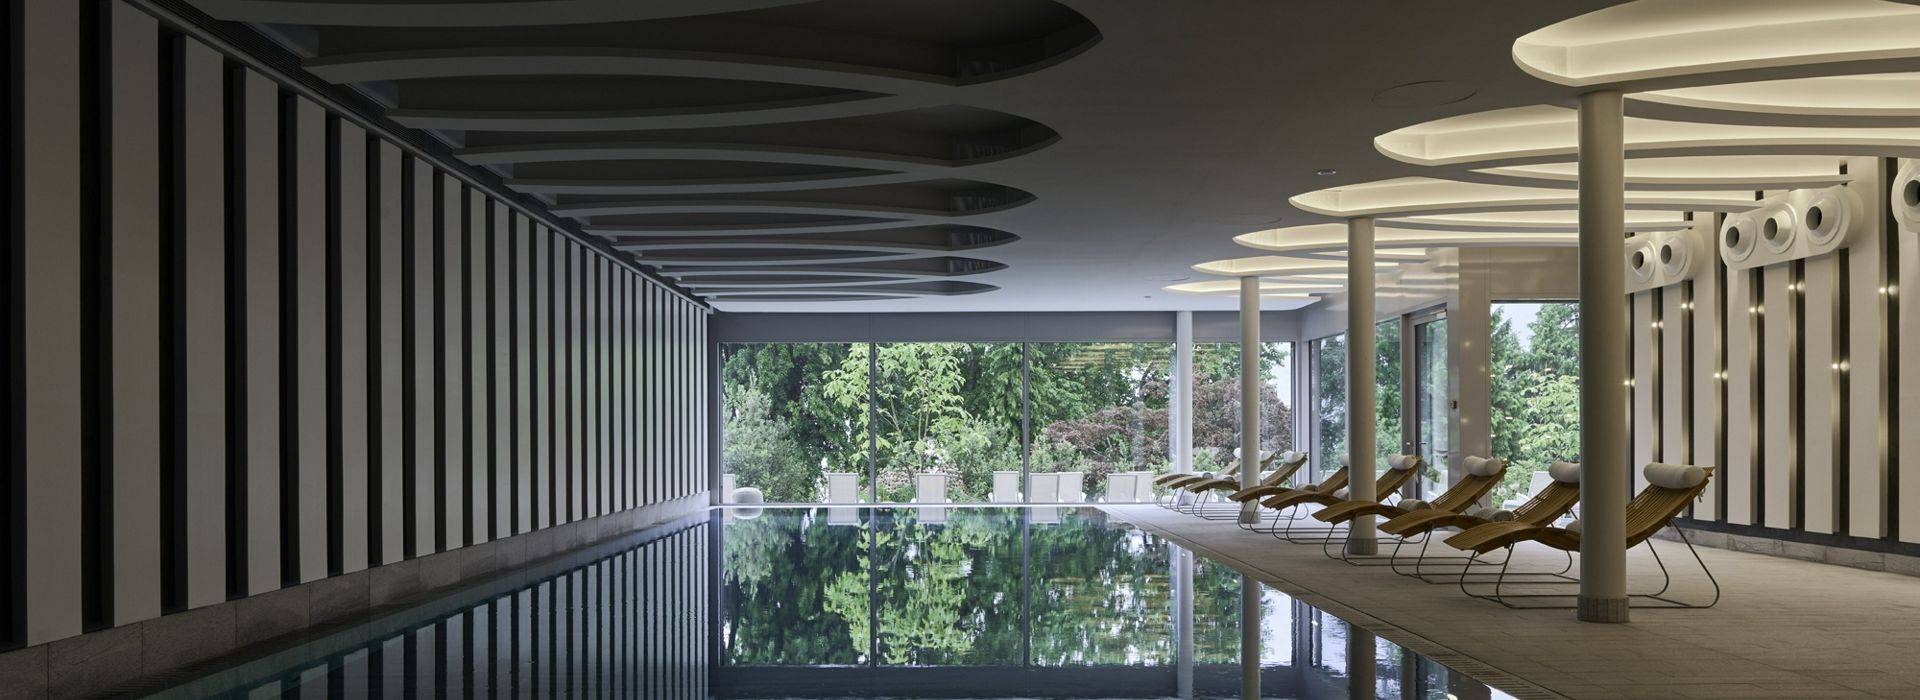 Chenot-Palace-Weggis-Architecture-IndoorPool-FabriceFouillet.jpg